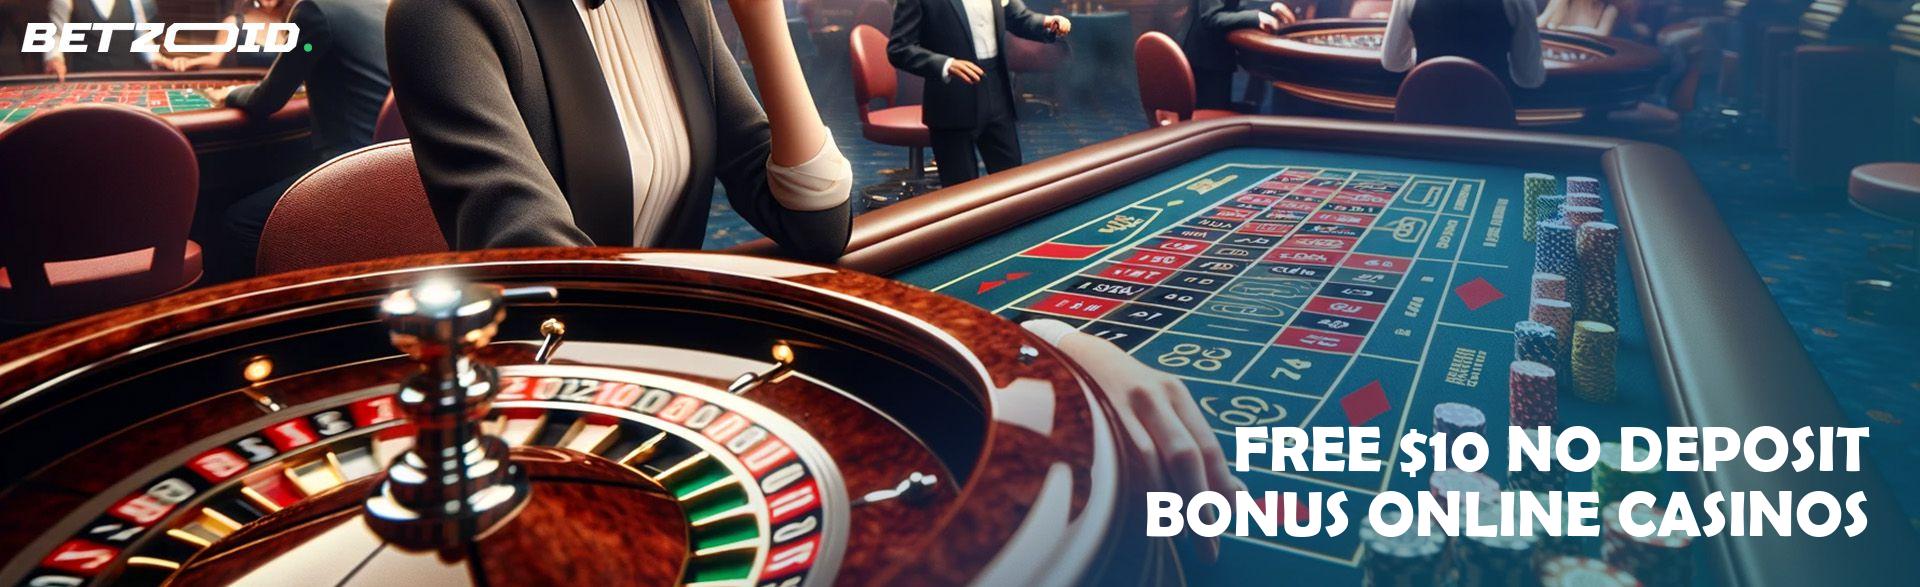 new online casinos  no deposit bonus